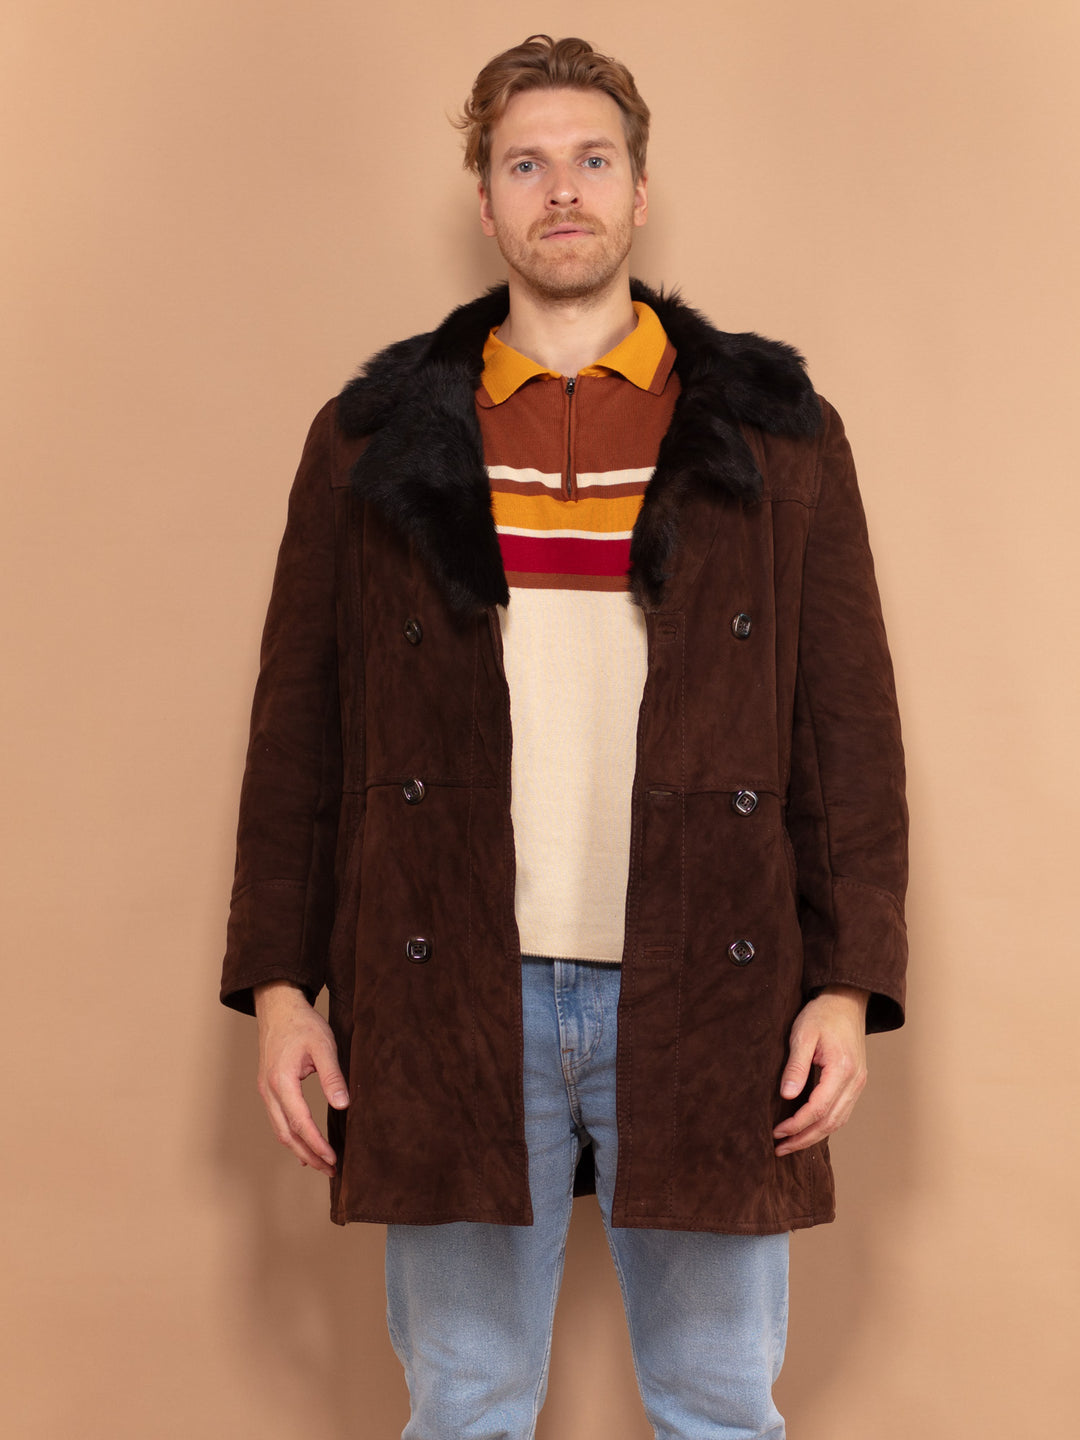 Men Suede Sheepskin Coat 90s, Size Medium, Vintage Chocolate Brown Shearling Coat, Retro Suede Outerwear, Classic Brown Coat